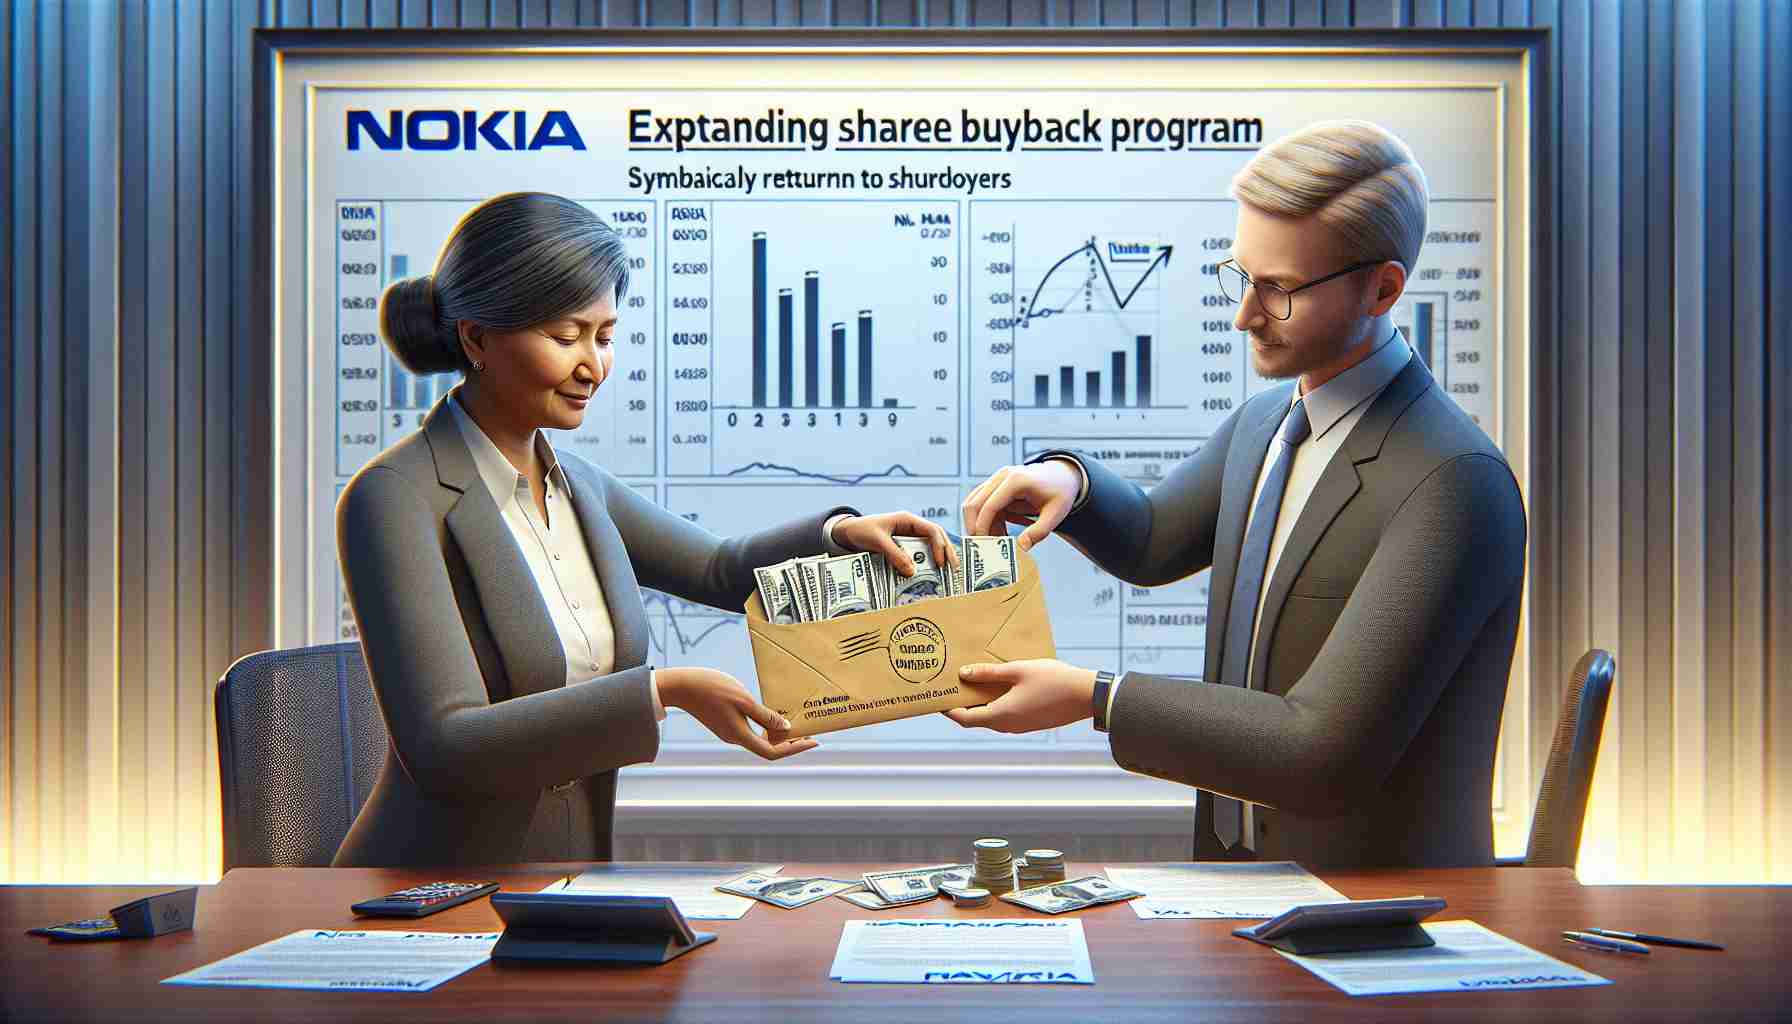 Nokia Corporation Expands Share Buyback Program, Returning Cash to Shareholders